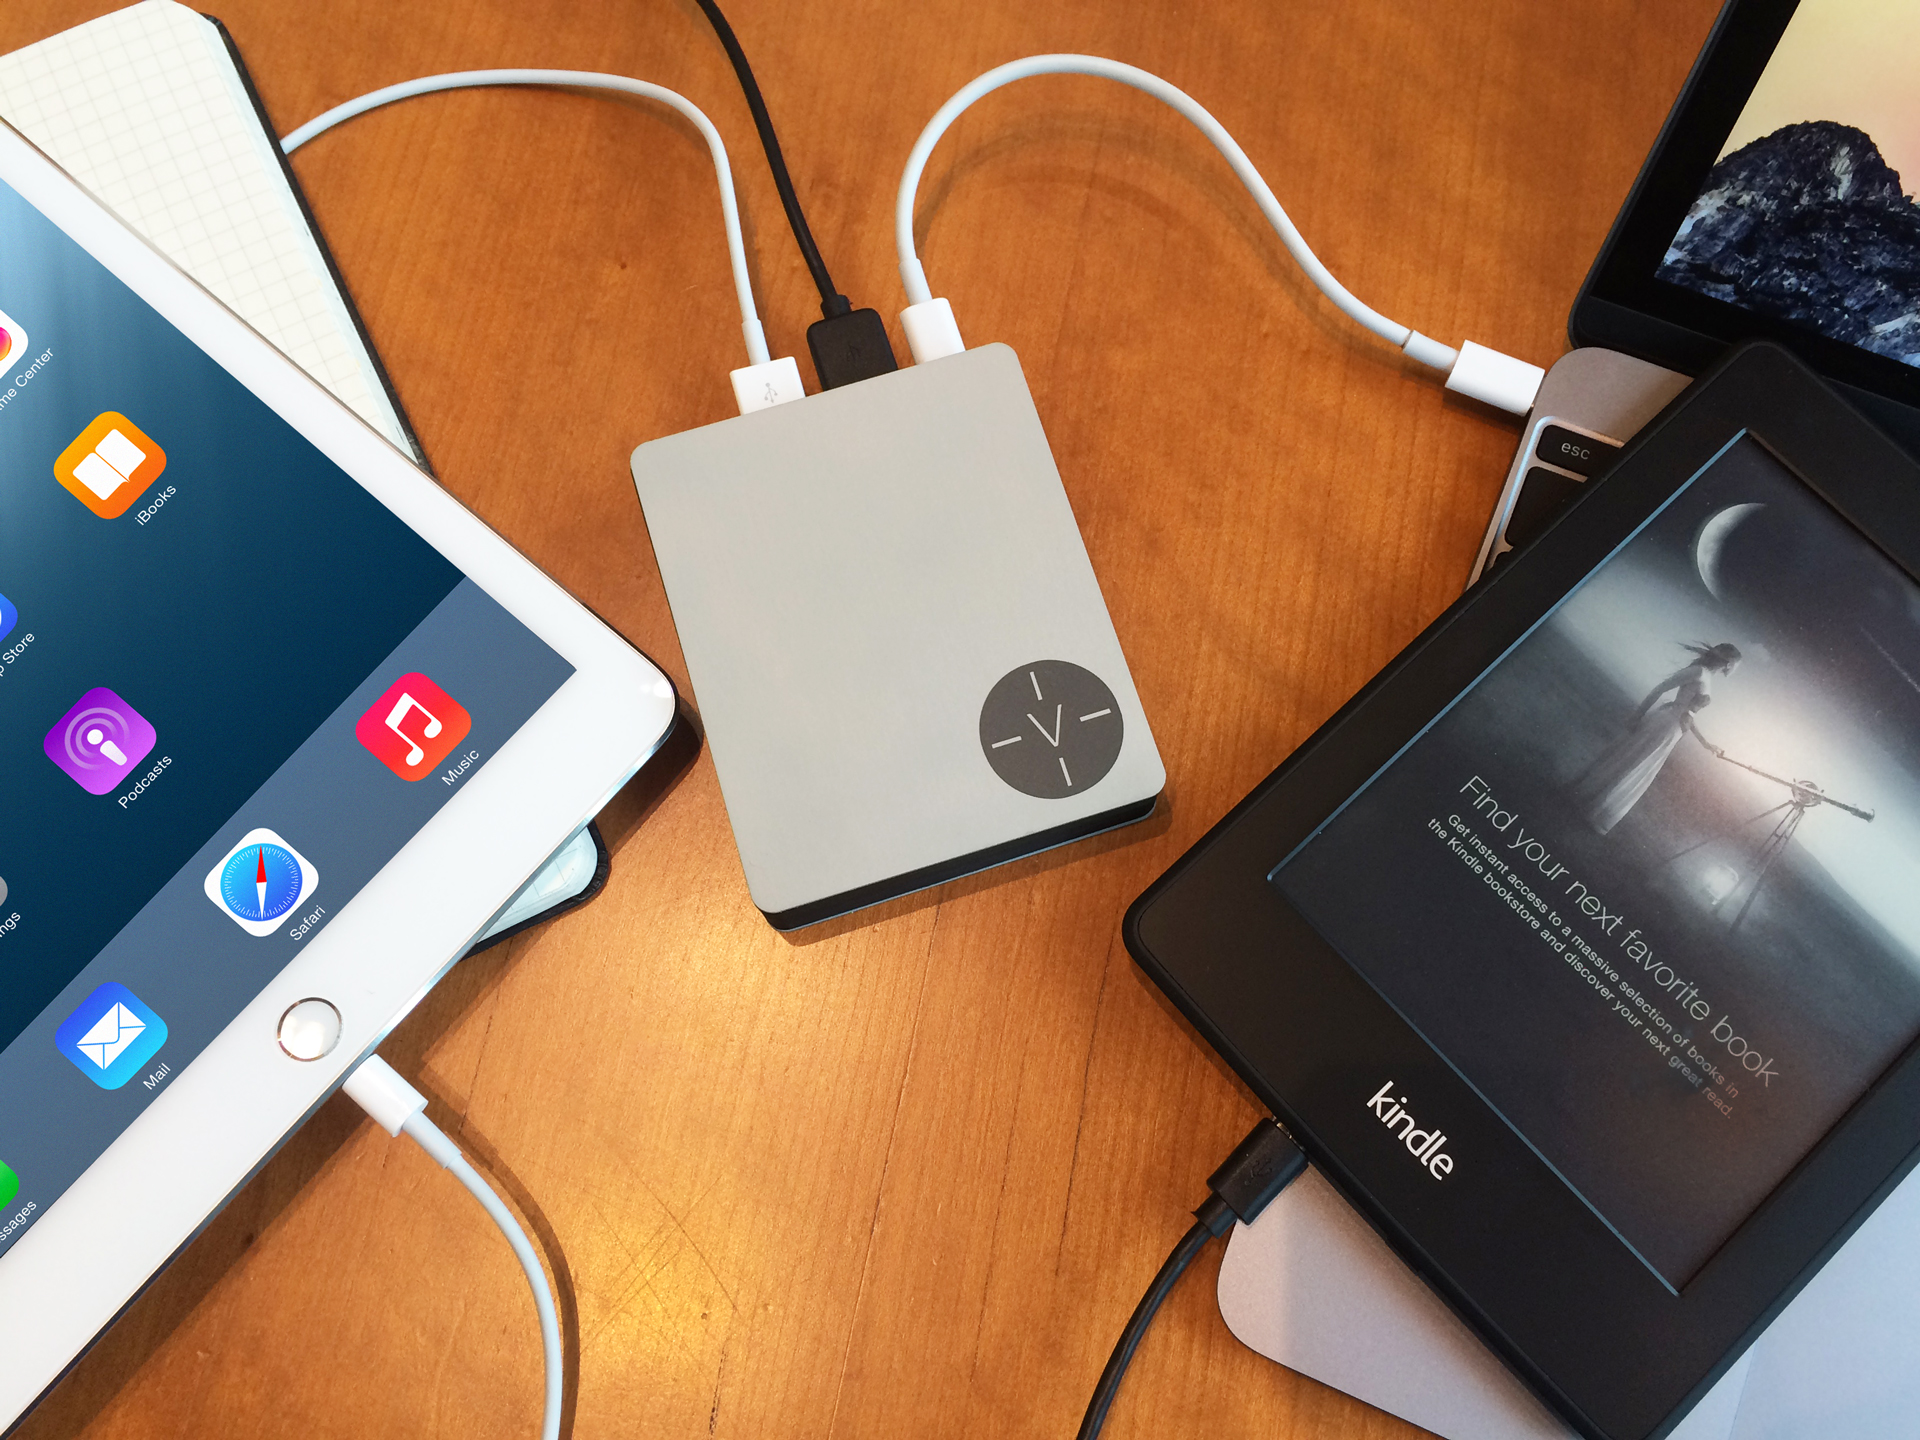 Charging-macbook-ipad-kindle